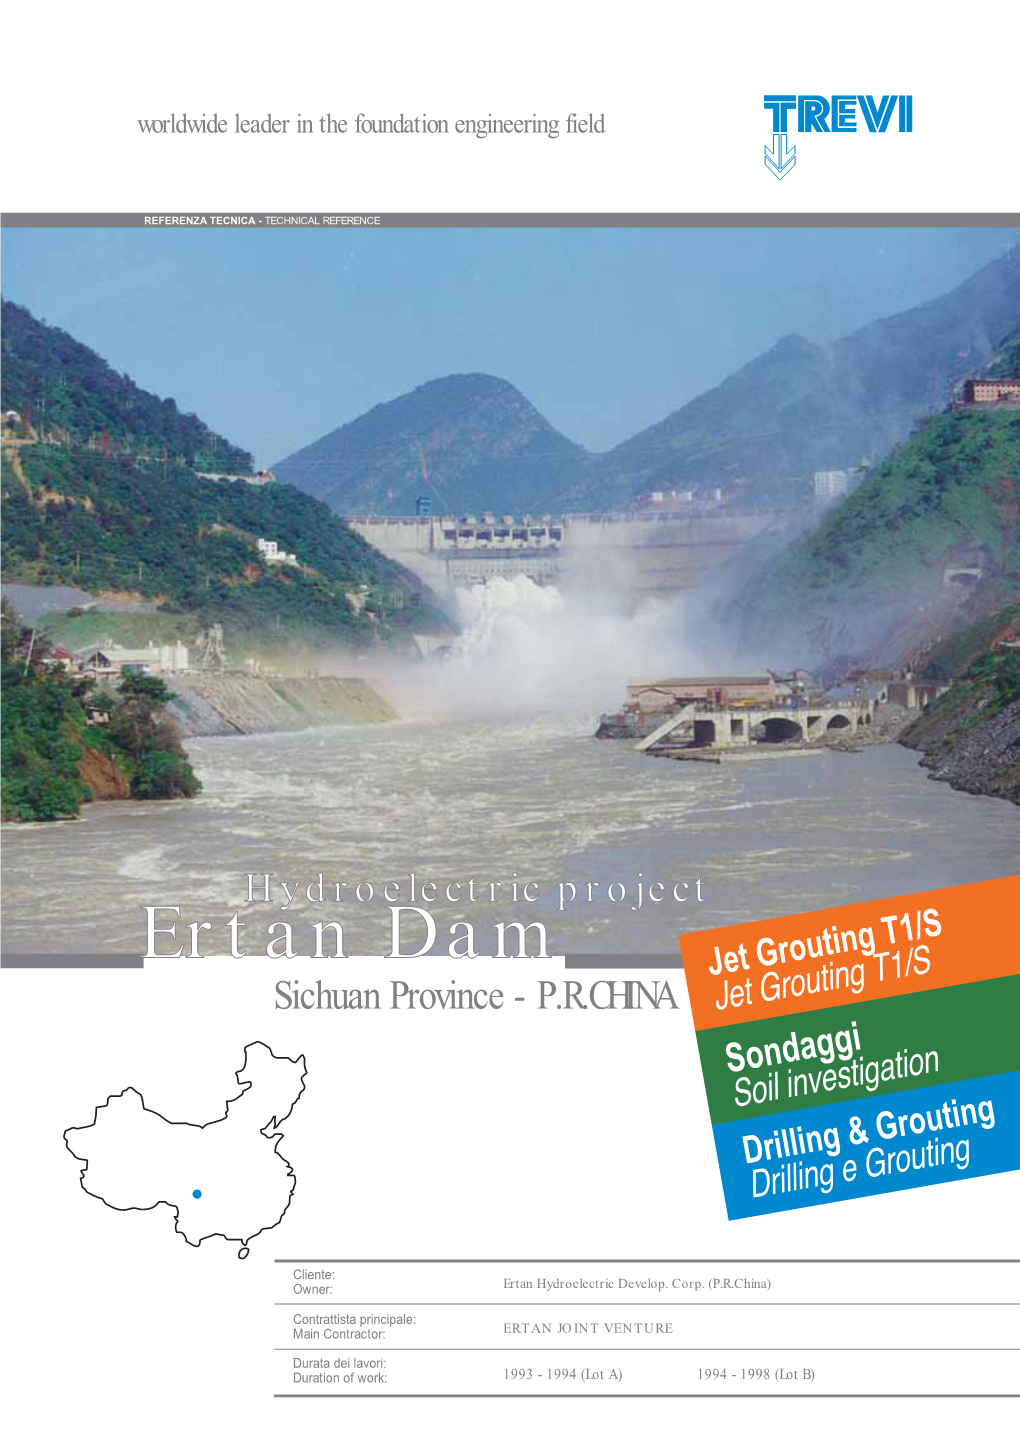 Ertan Dam Jet Grouting T1/S Sichuan Province - P.R.CHINA Jet Grouting T1/S Sondaggi Soil Investigation Drilling & Grouting Drilling E Grouting